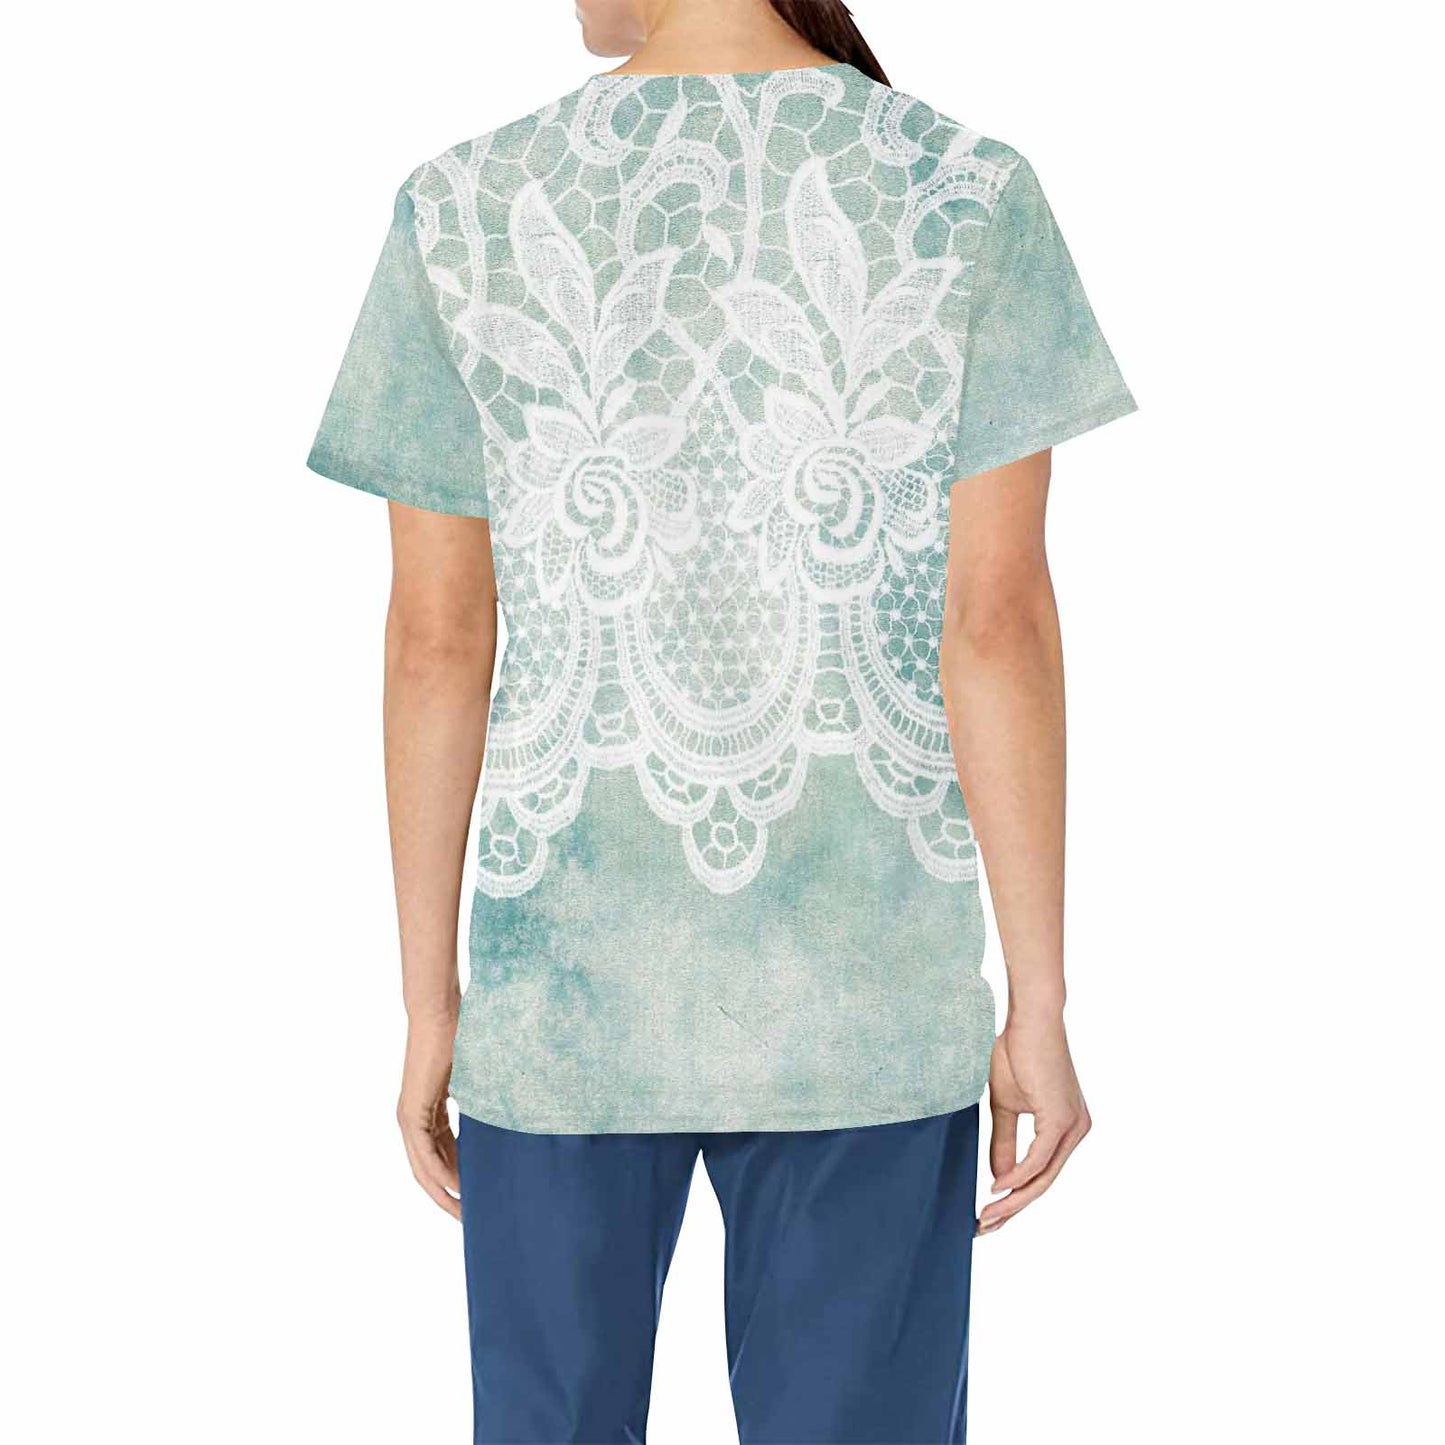 Victorian lace print professional scrubs, nurses scrub, unisex, design 41